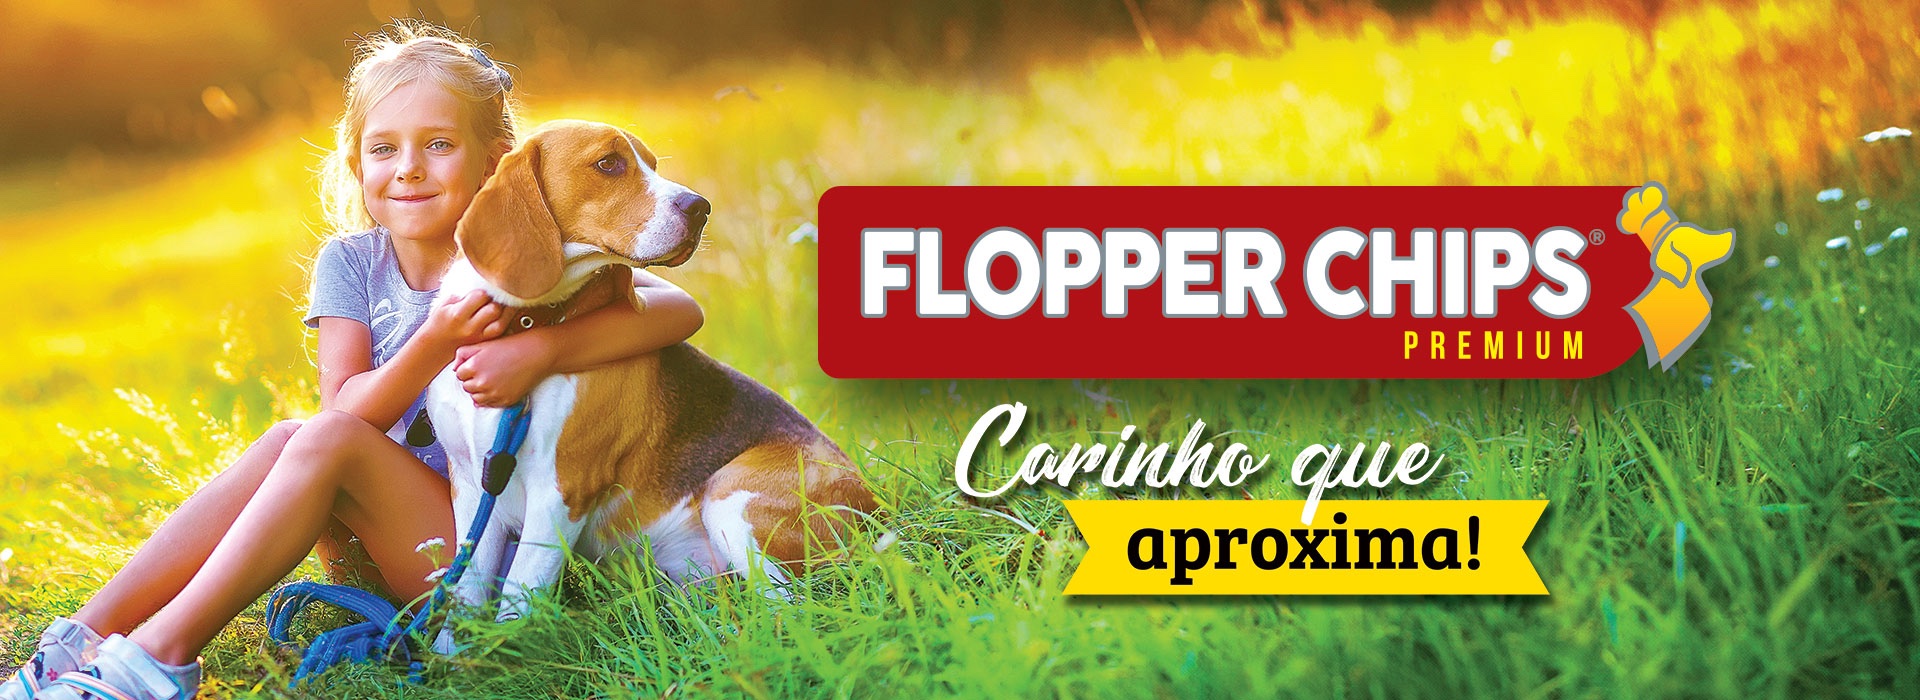 Flopper Chips Premium